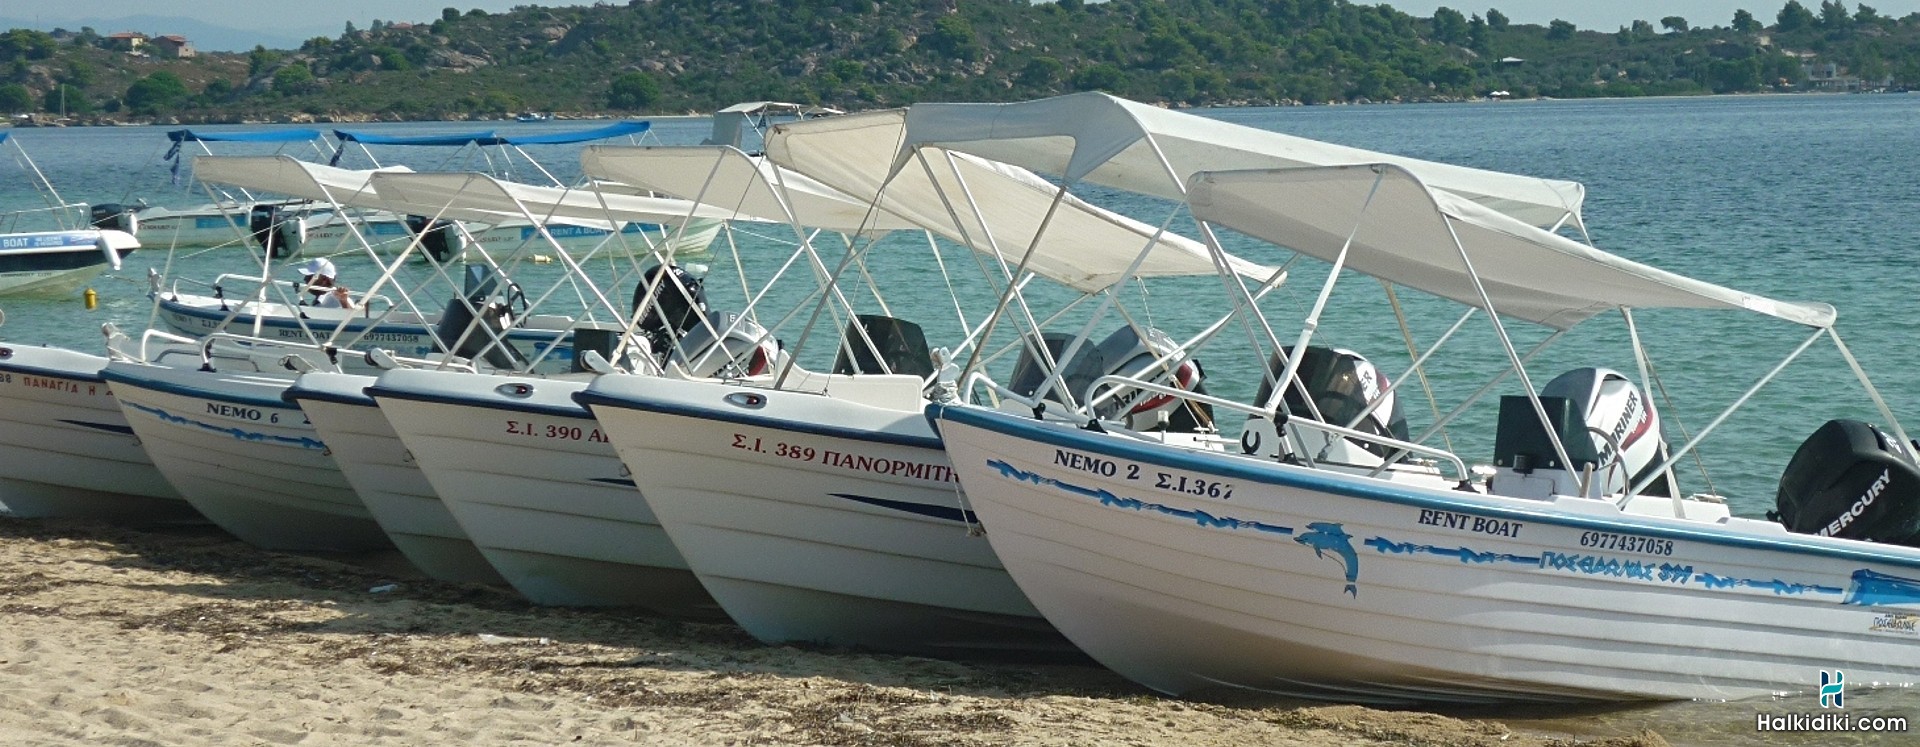 Nautilus Boats